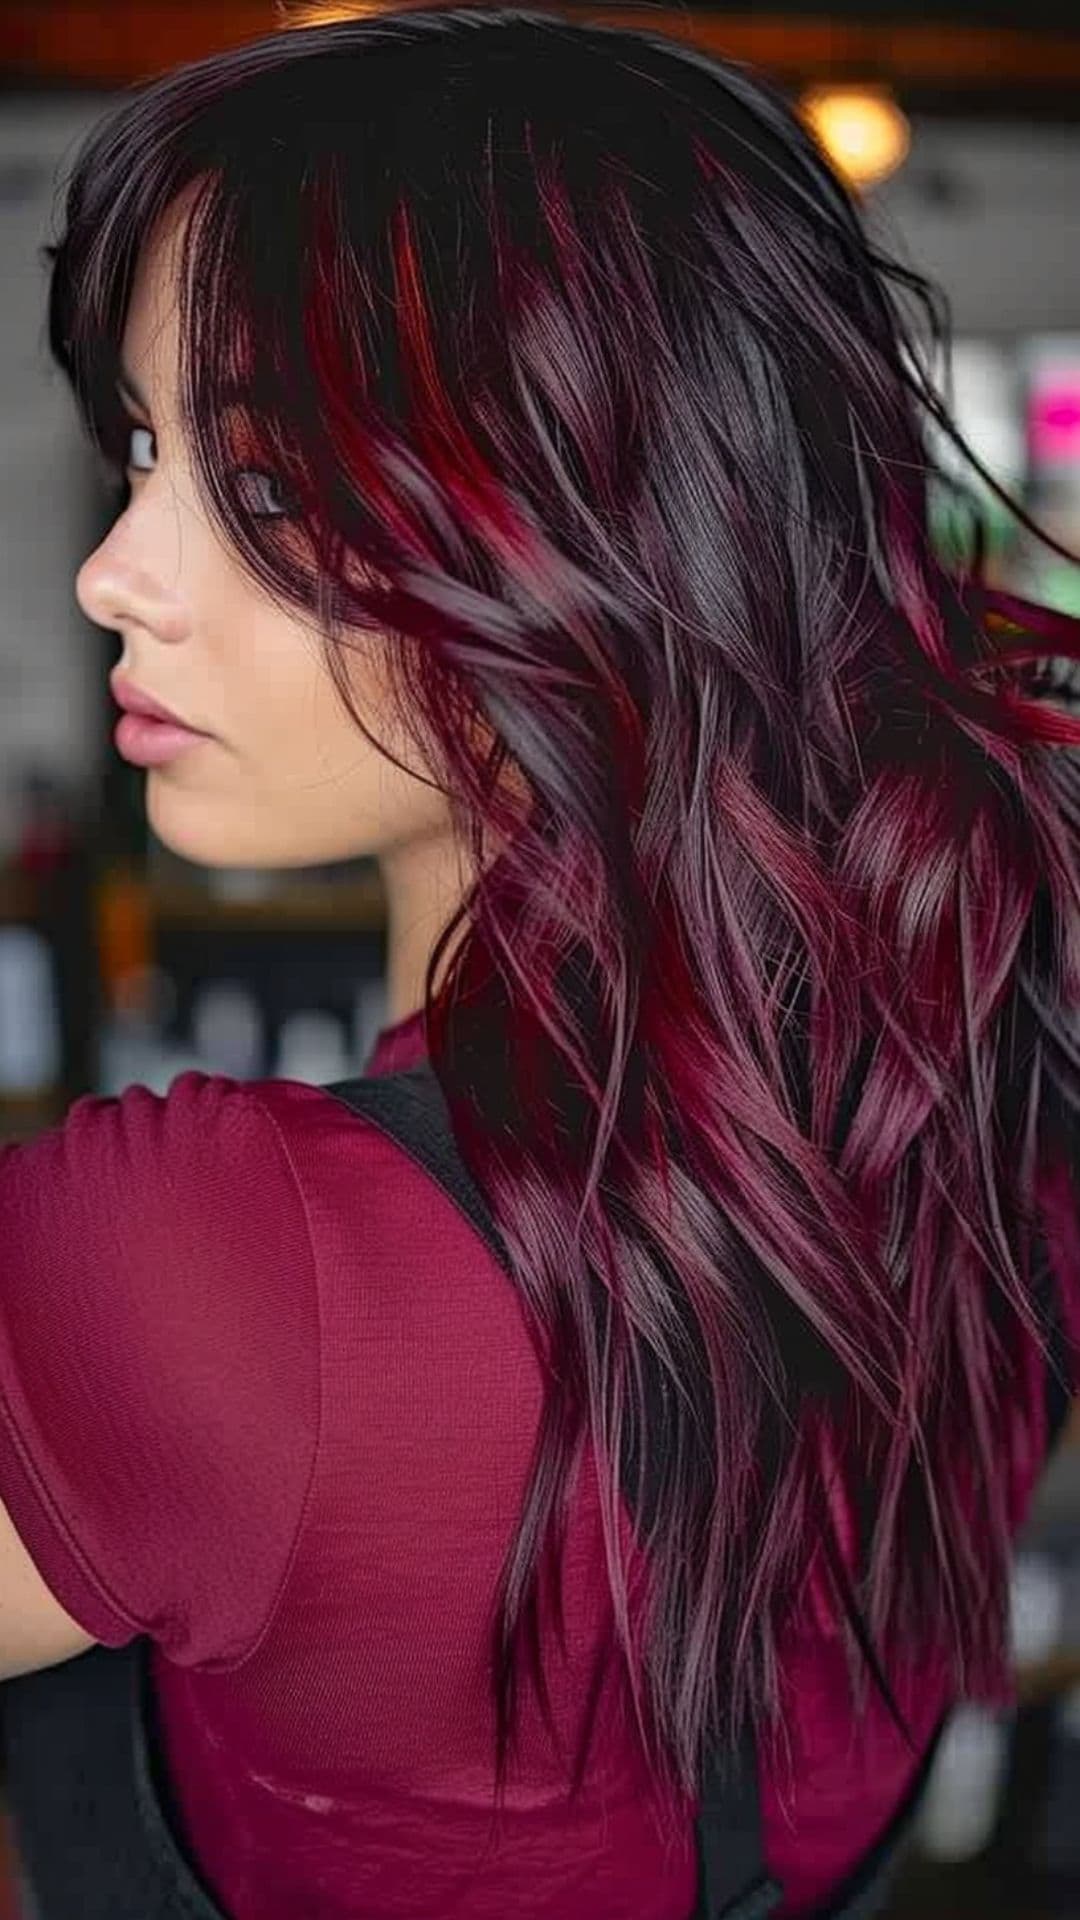 A woman modelling a bright black raspberry hair.